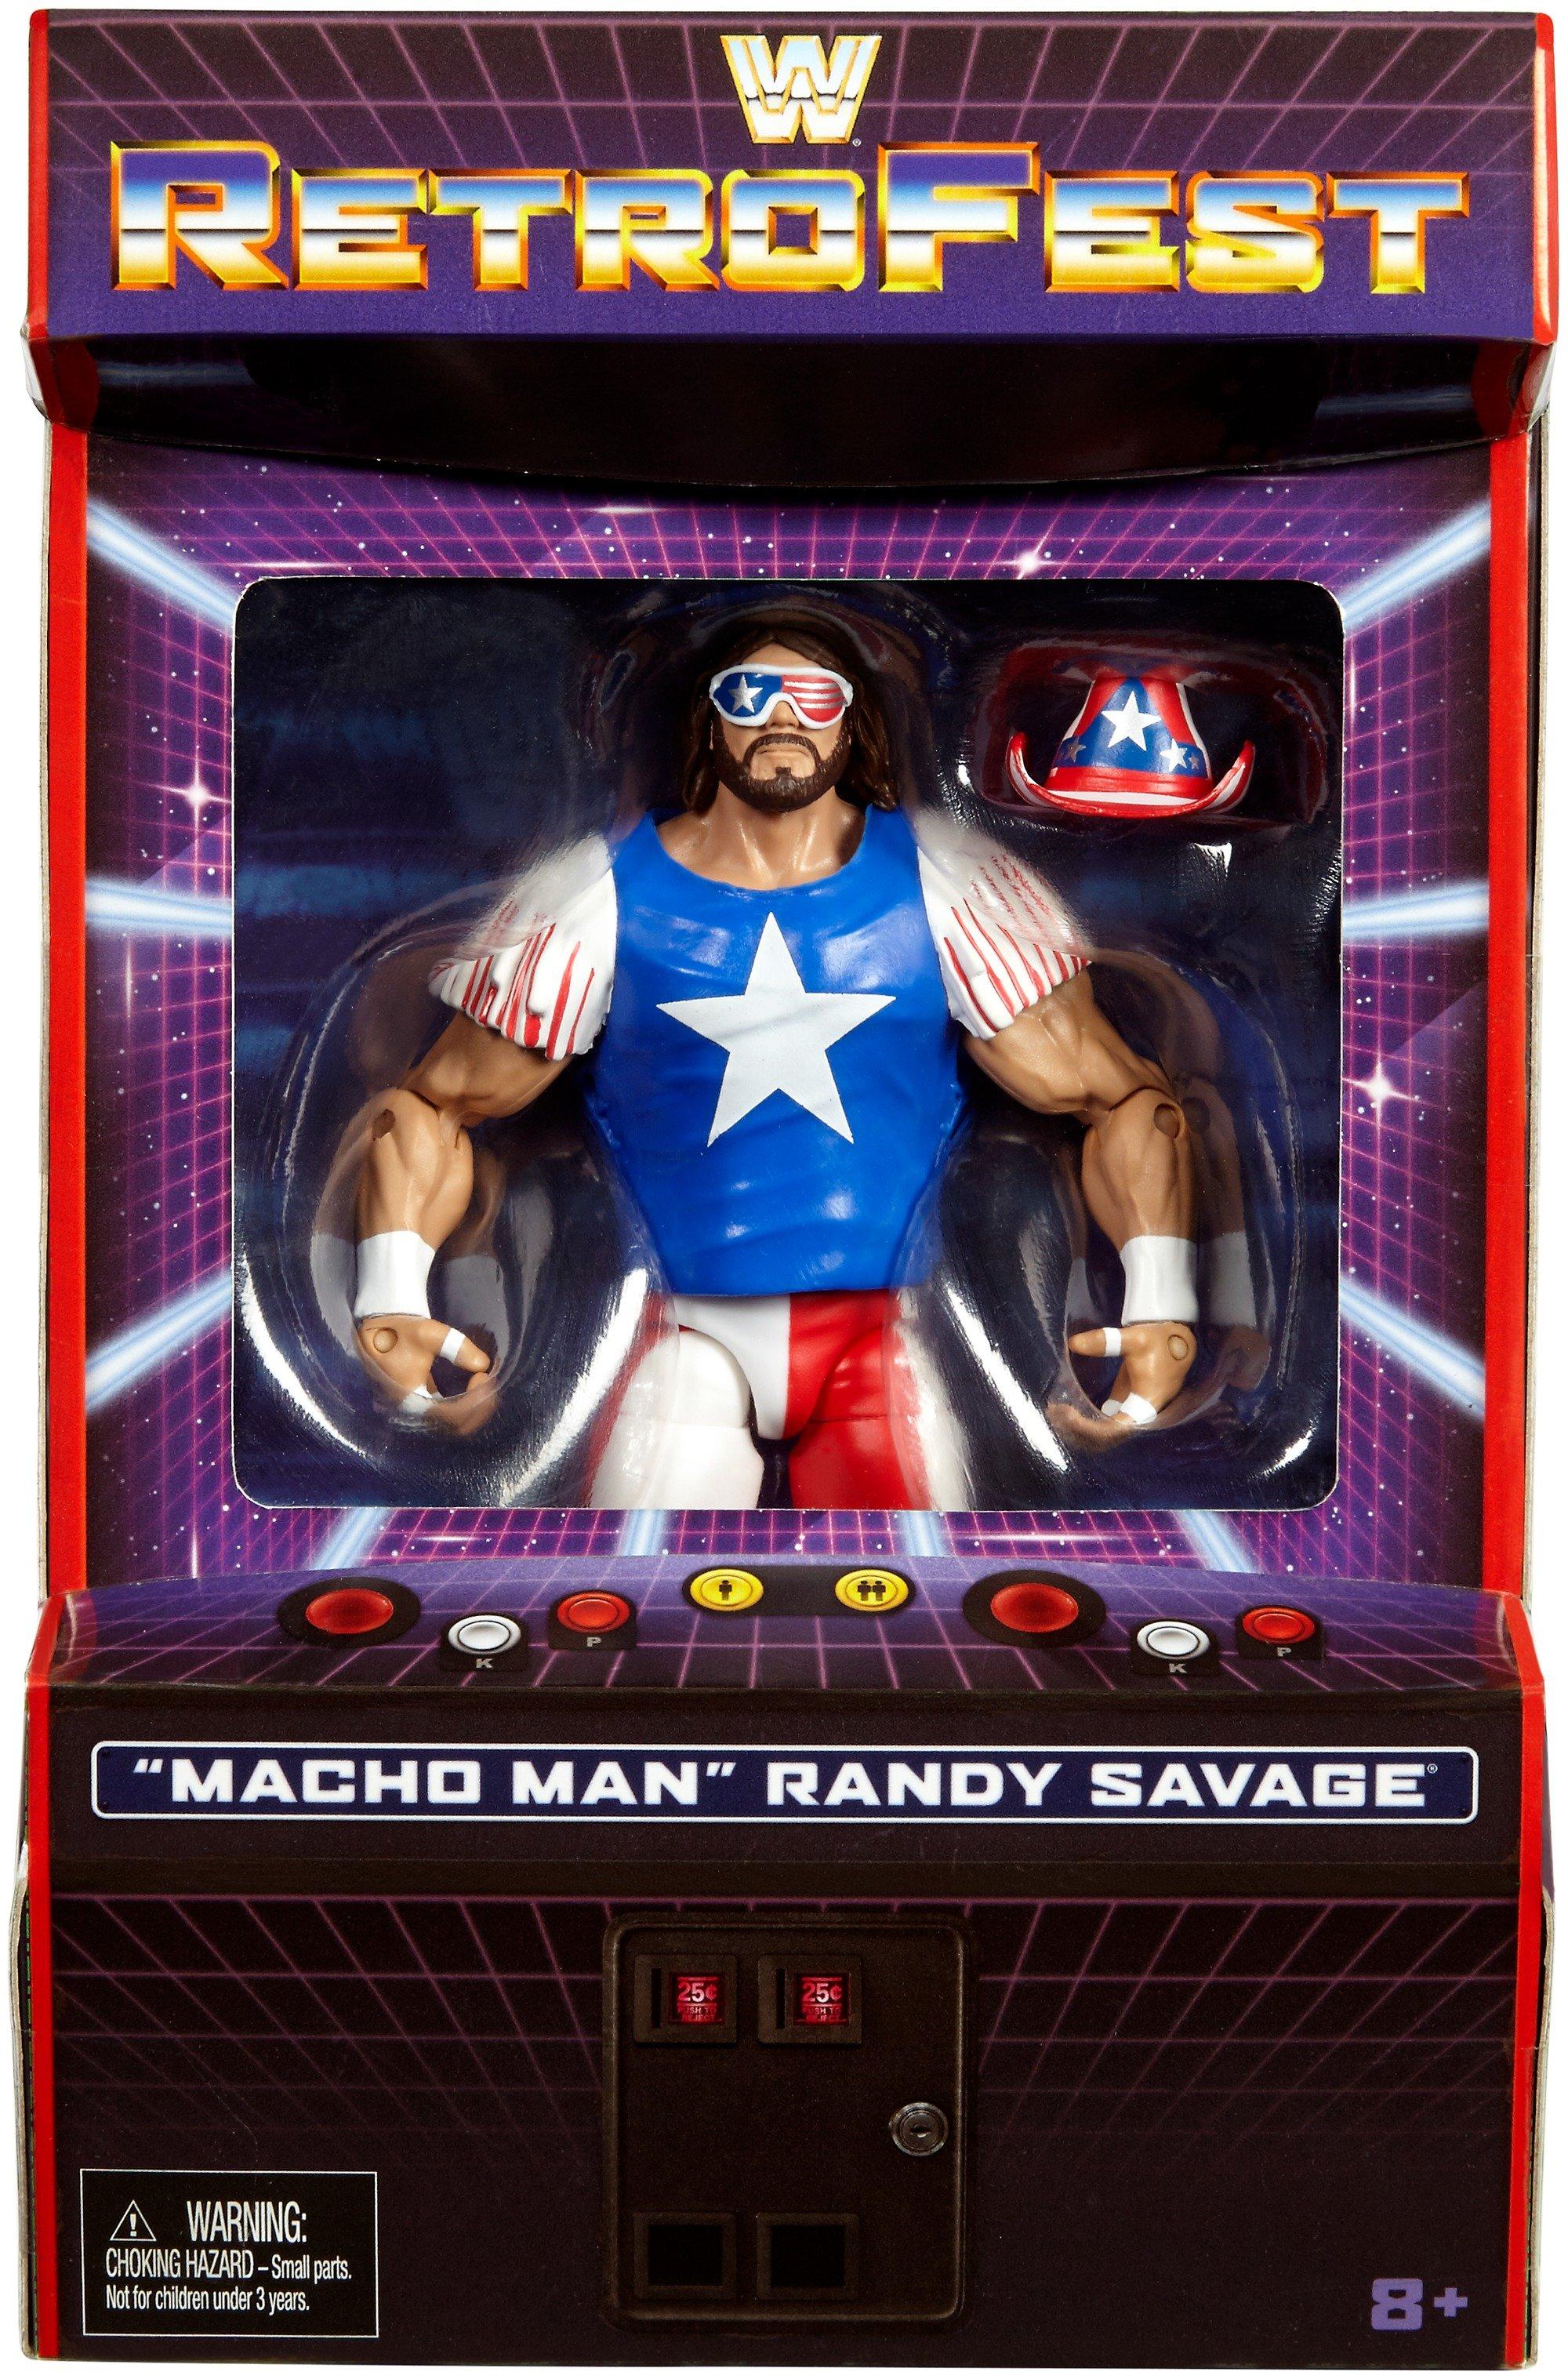 Wwe Macho Man Randy Savage Elite Collection Retrofest Action Figure Only At Gamestop Gamestop